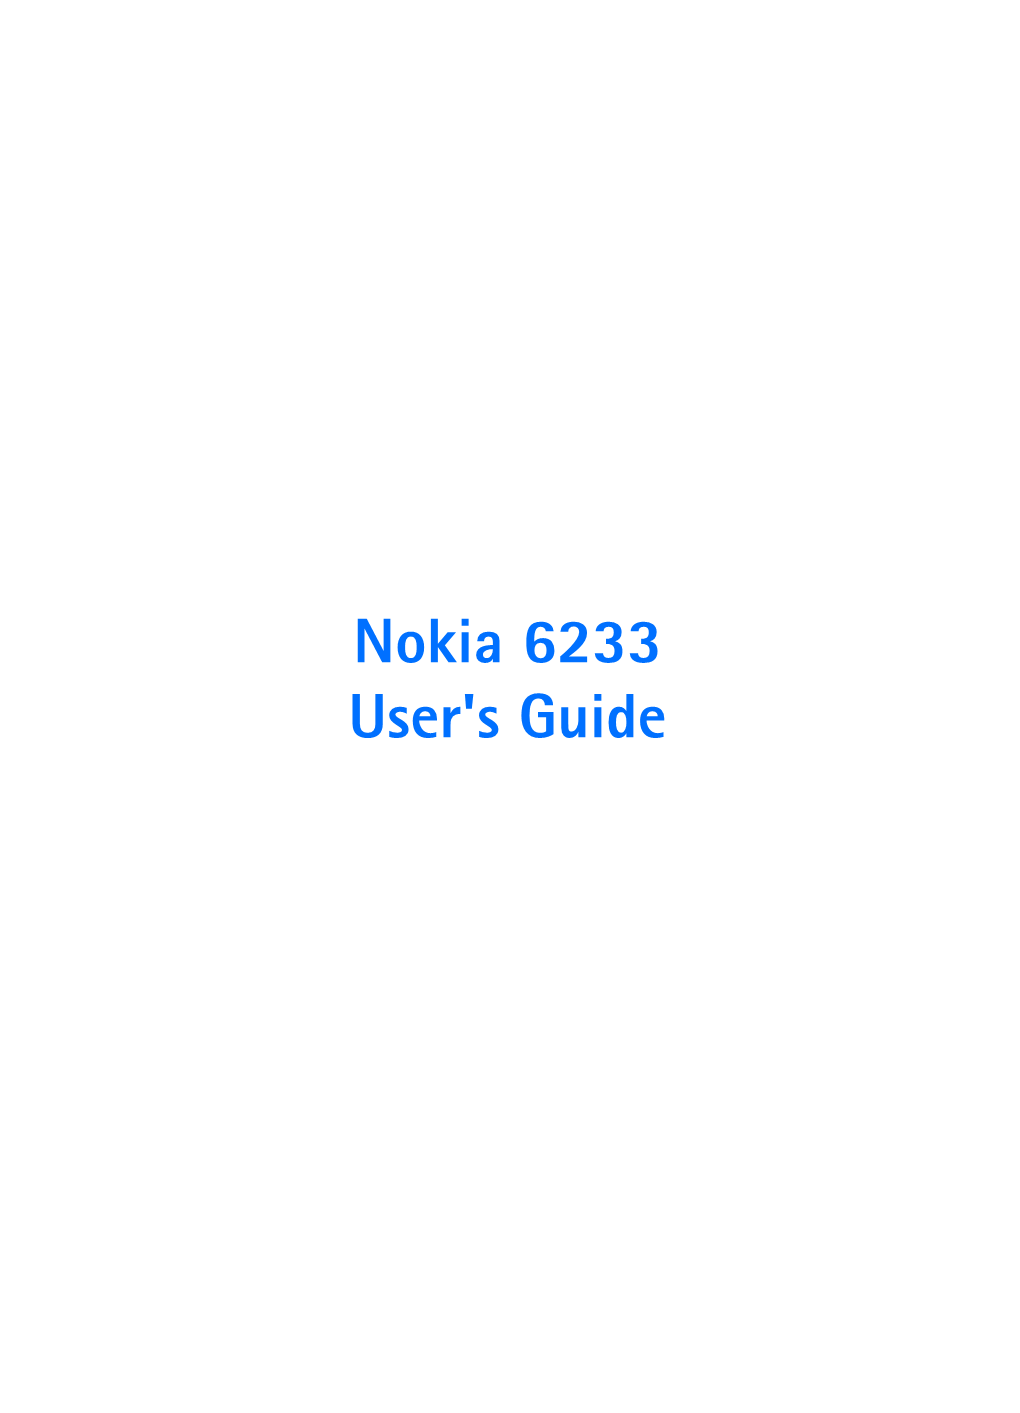 Nokia 6233 User's Guide